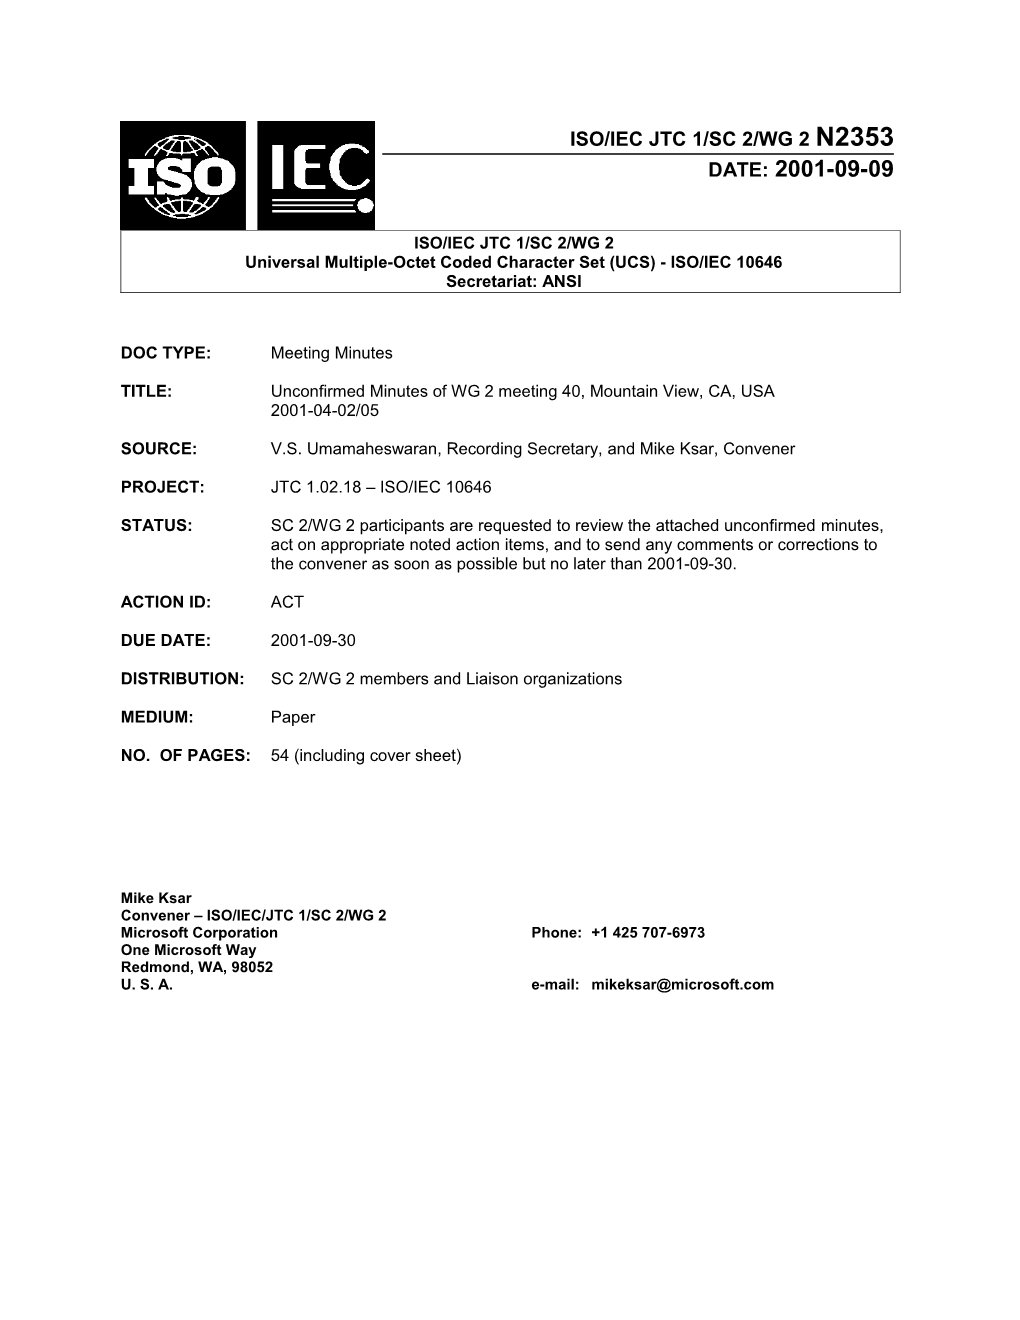 ISO/IEC JTC1/SC2 Meeting # 40 - 2001-04-02/06